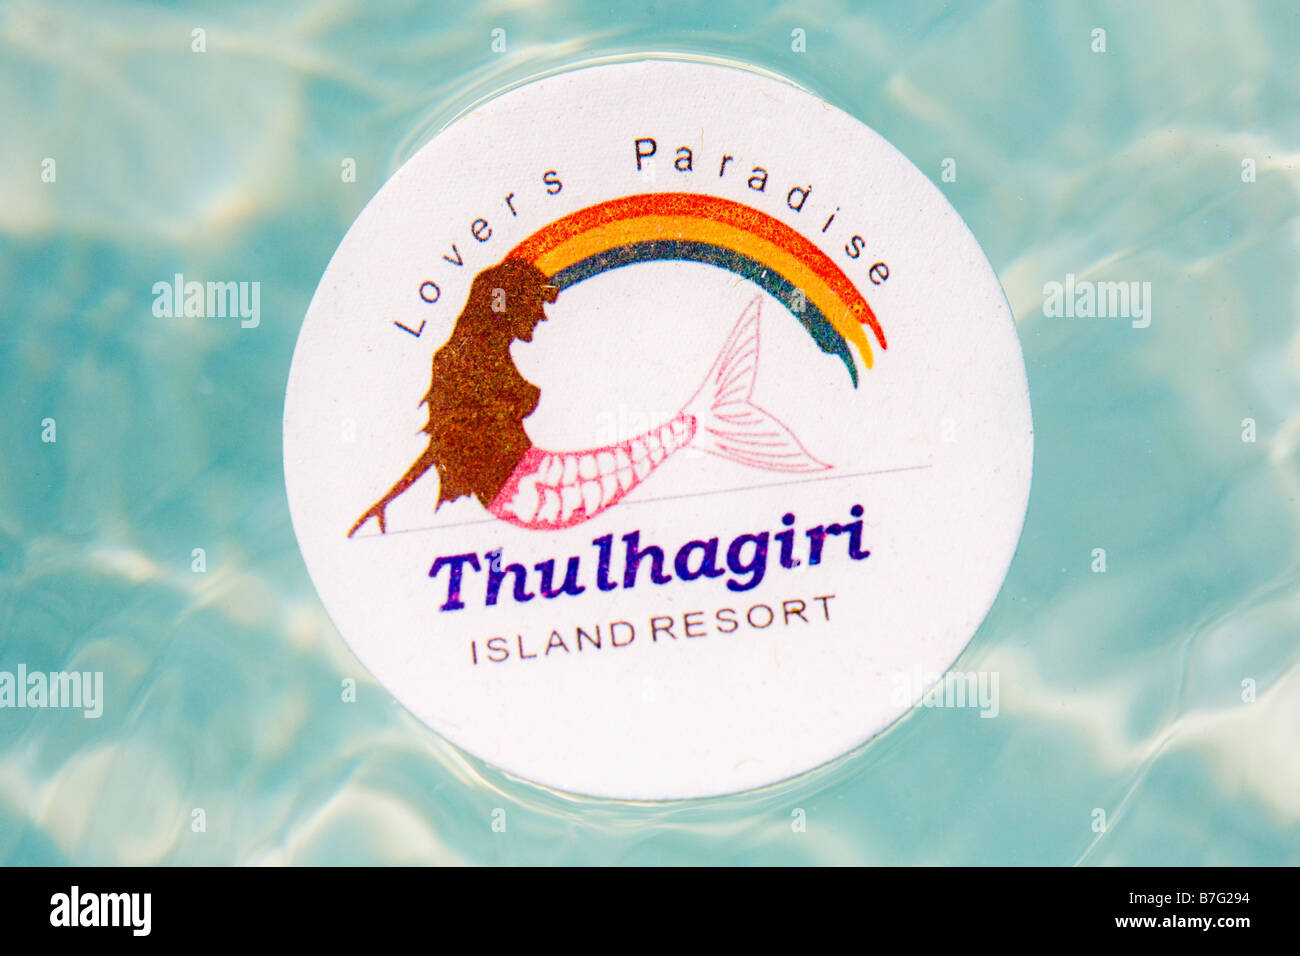 Thulhagiri Island Resort Werbematerial (Malediven) Stockfoto